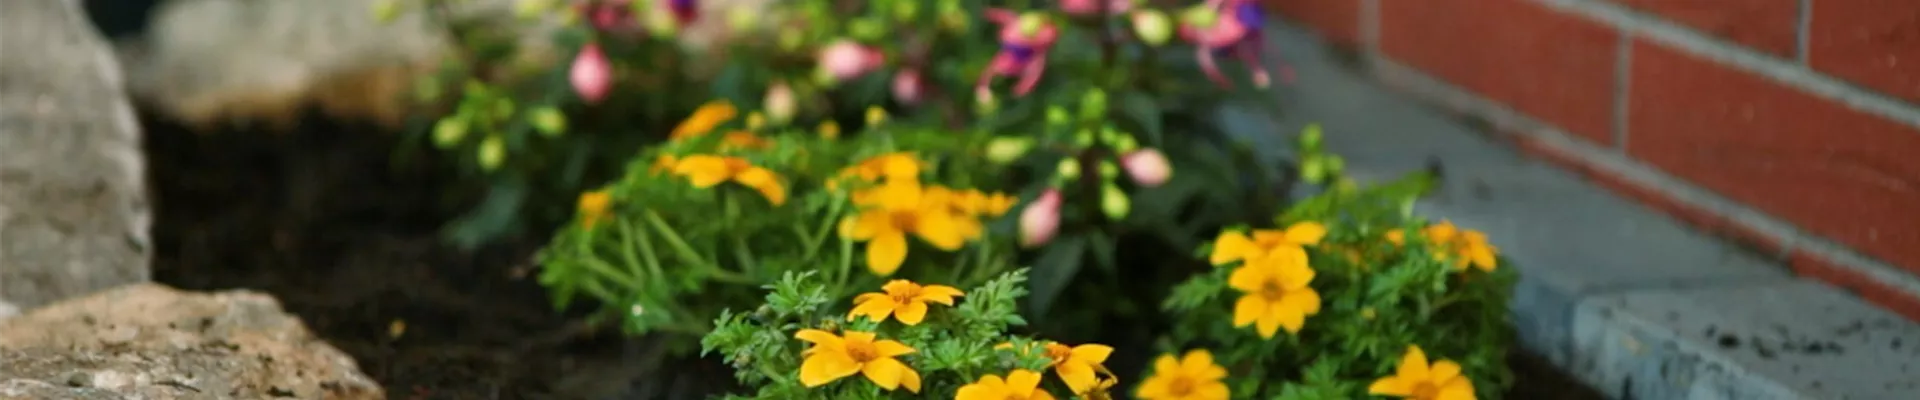 Goldmarie - Einpflanzen in den Garten (Thumbnail).jpg